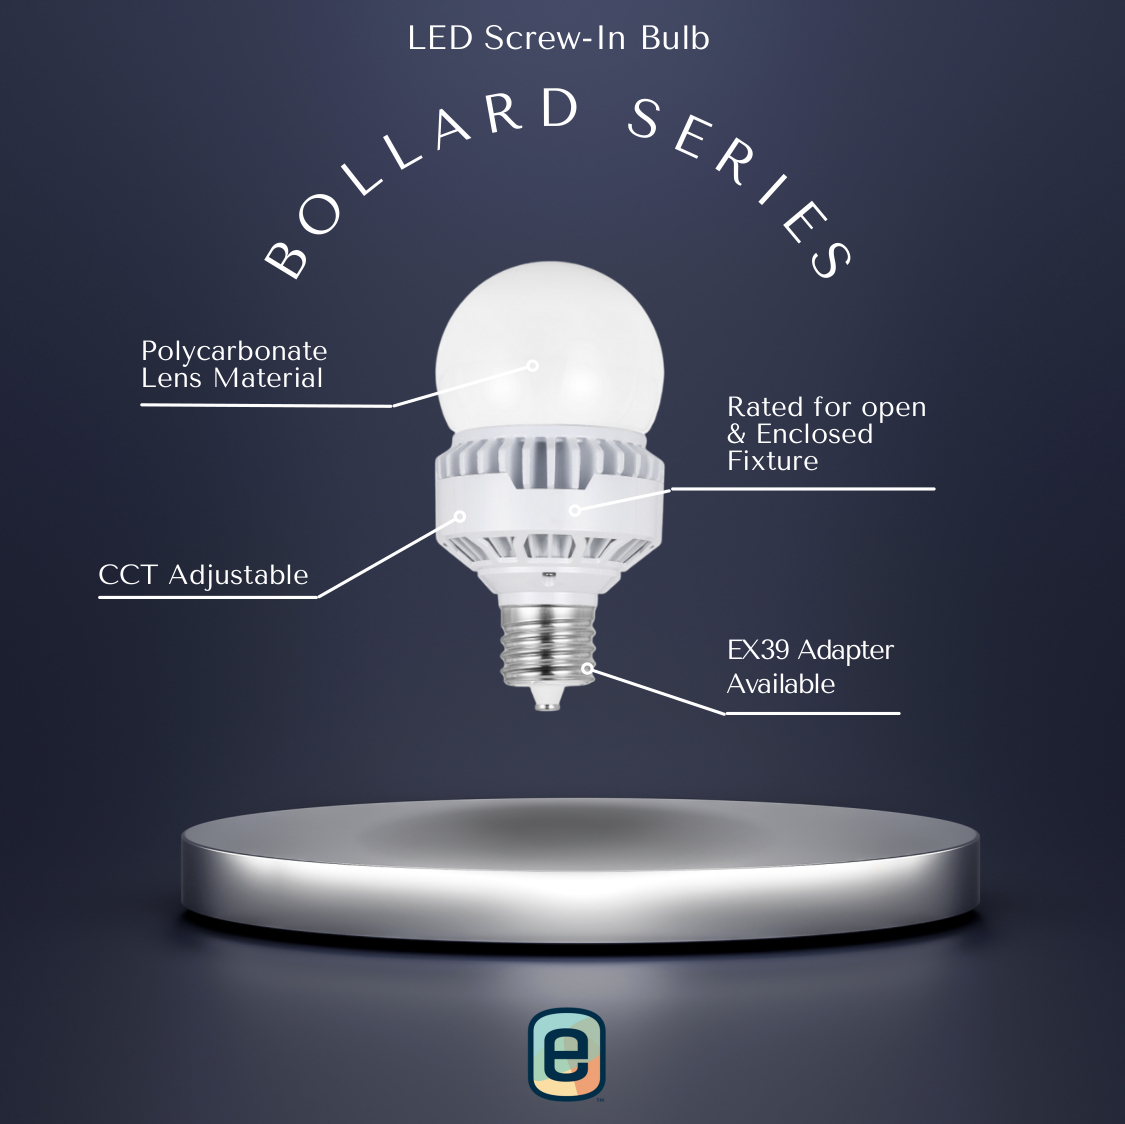 LED Screw-In Bulbs: Bollard Series